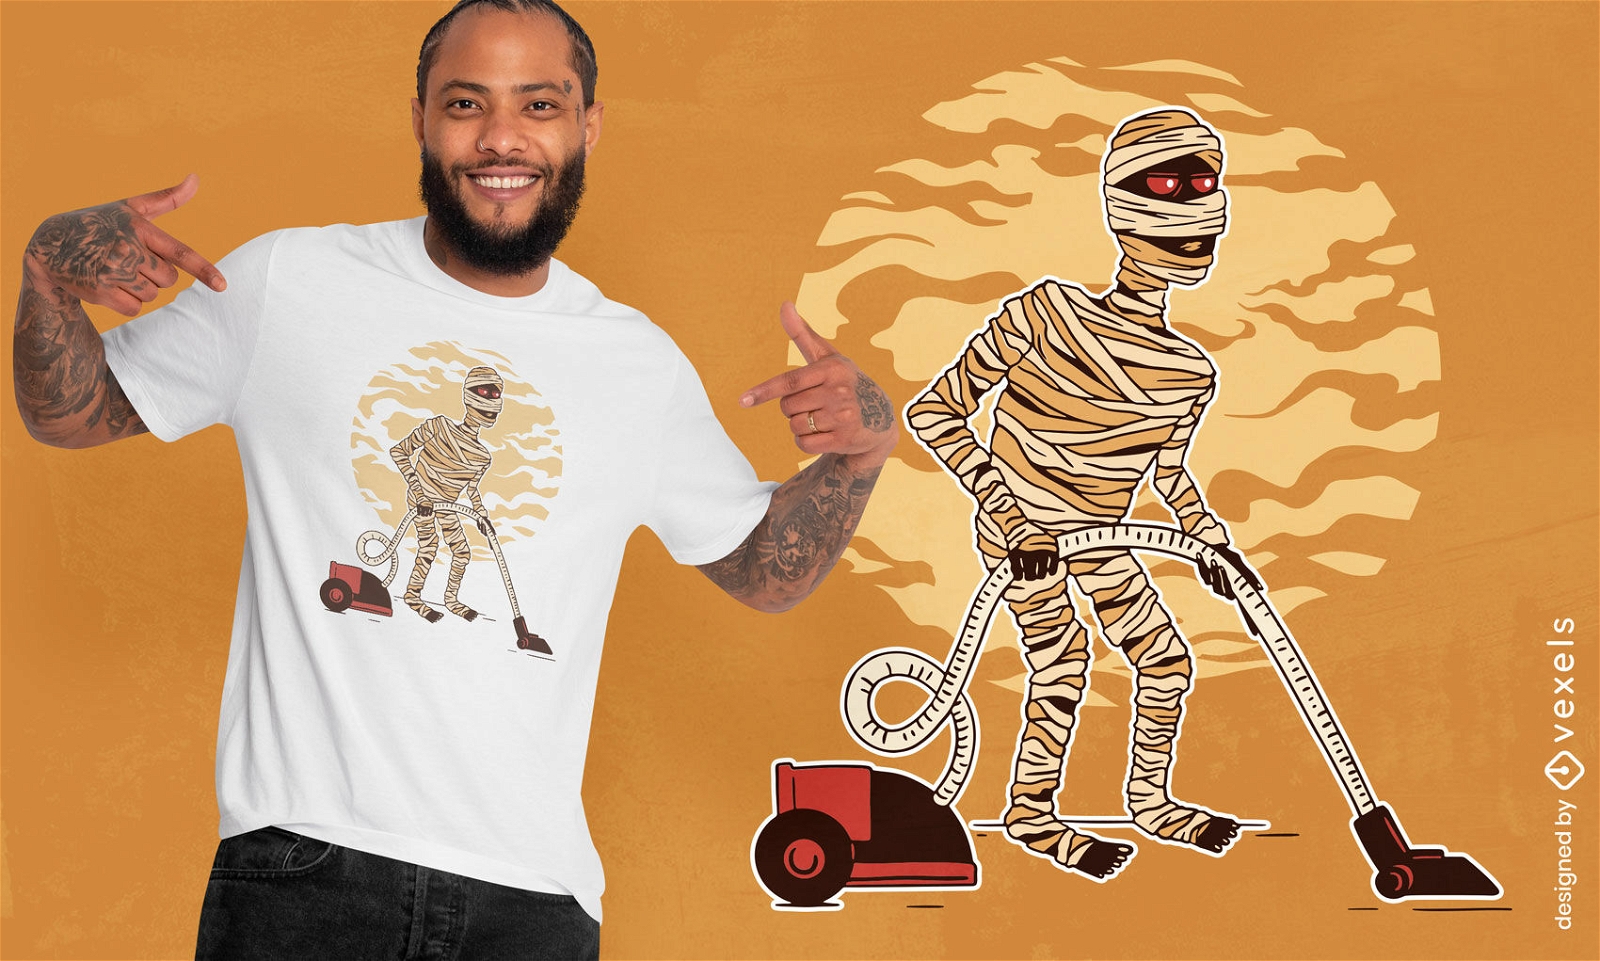 Mummy vacuuming cartoon t-shirt design